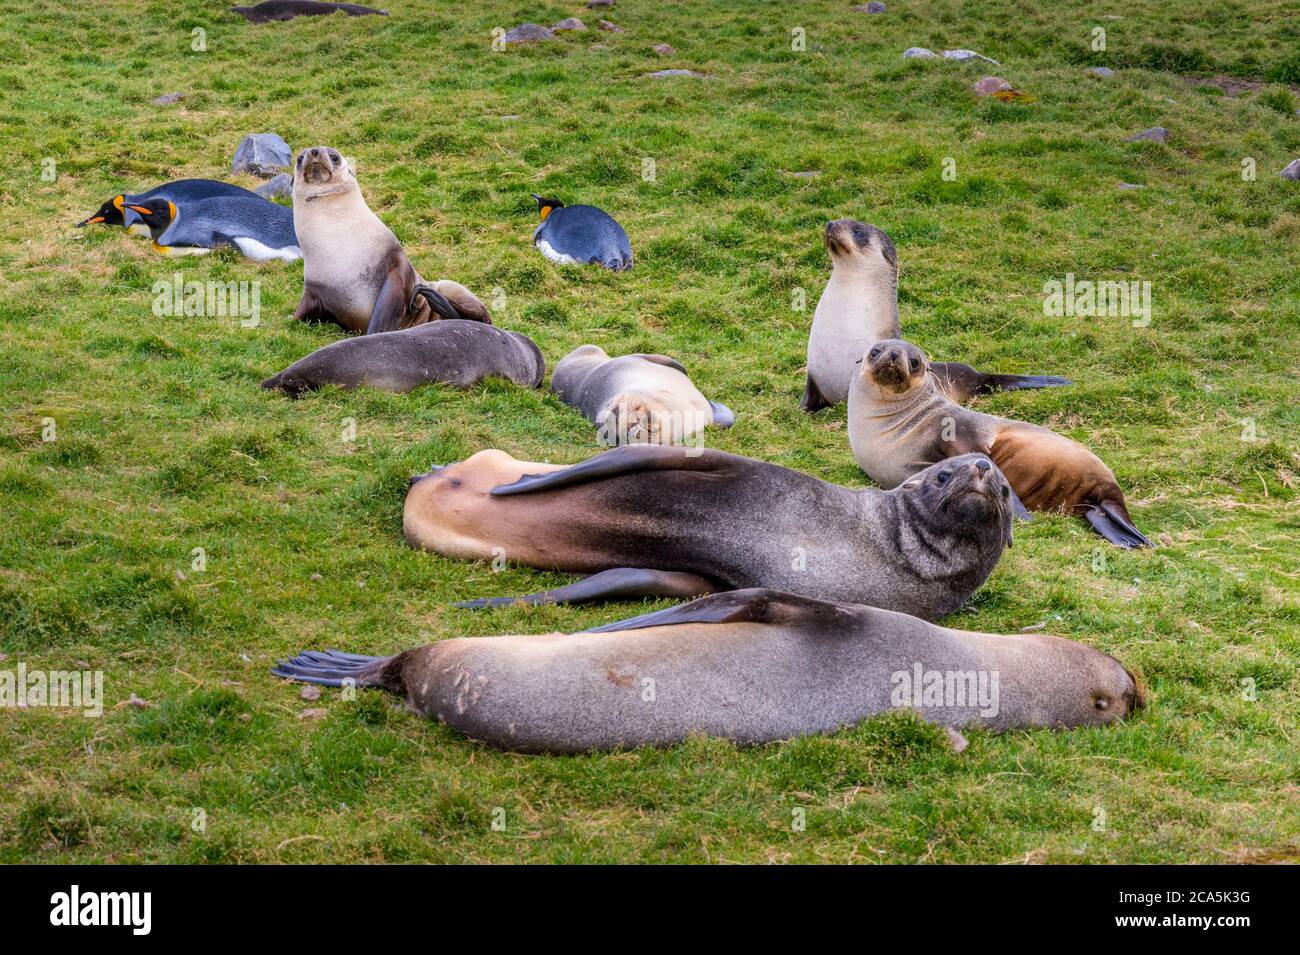 Antarctica, South Georgia Island (British overseas territory), Saint Andrews Bay, colony of Antarctic fur seals or Kerguelen seals (Arctocephalus gazella) Stock Photo